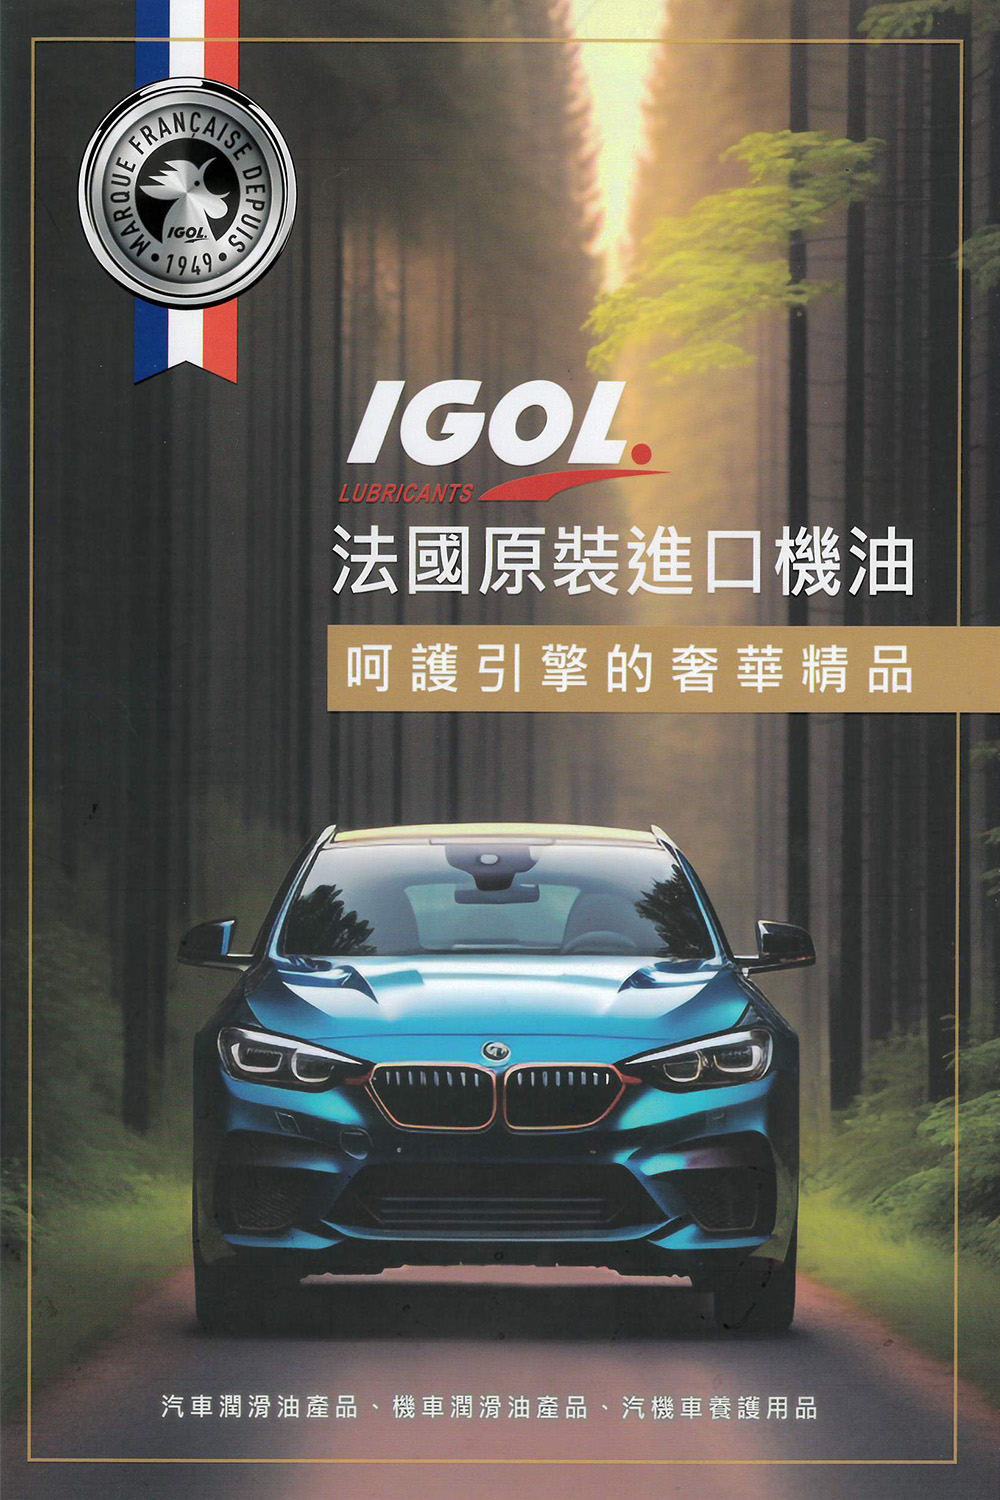 IGOL法國原裝進口機油 PROFIVE 508/509 0